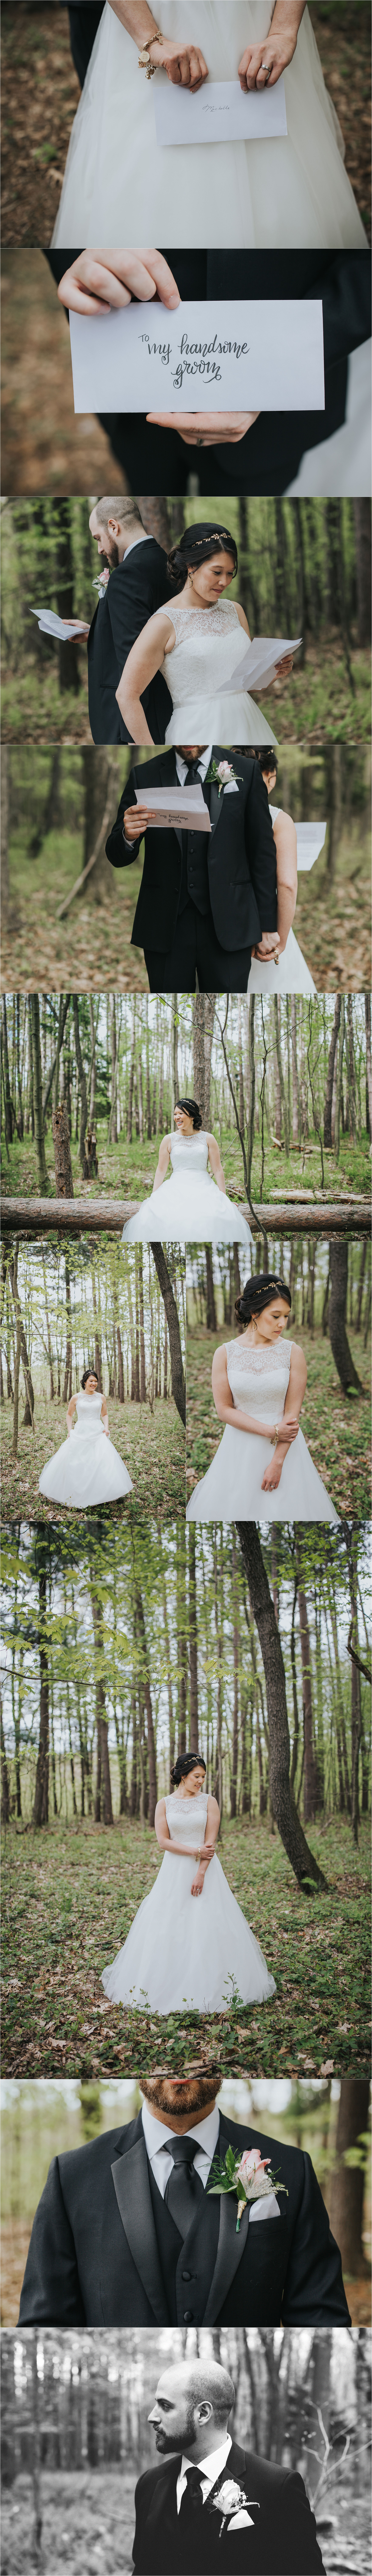 08 woodsy-bride-and-groom-portraits-knox-pa-oakwood-photo-video.jpg